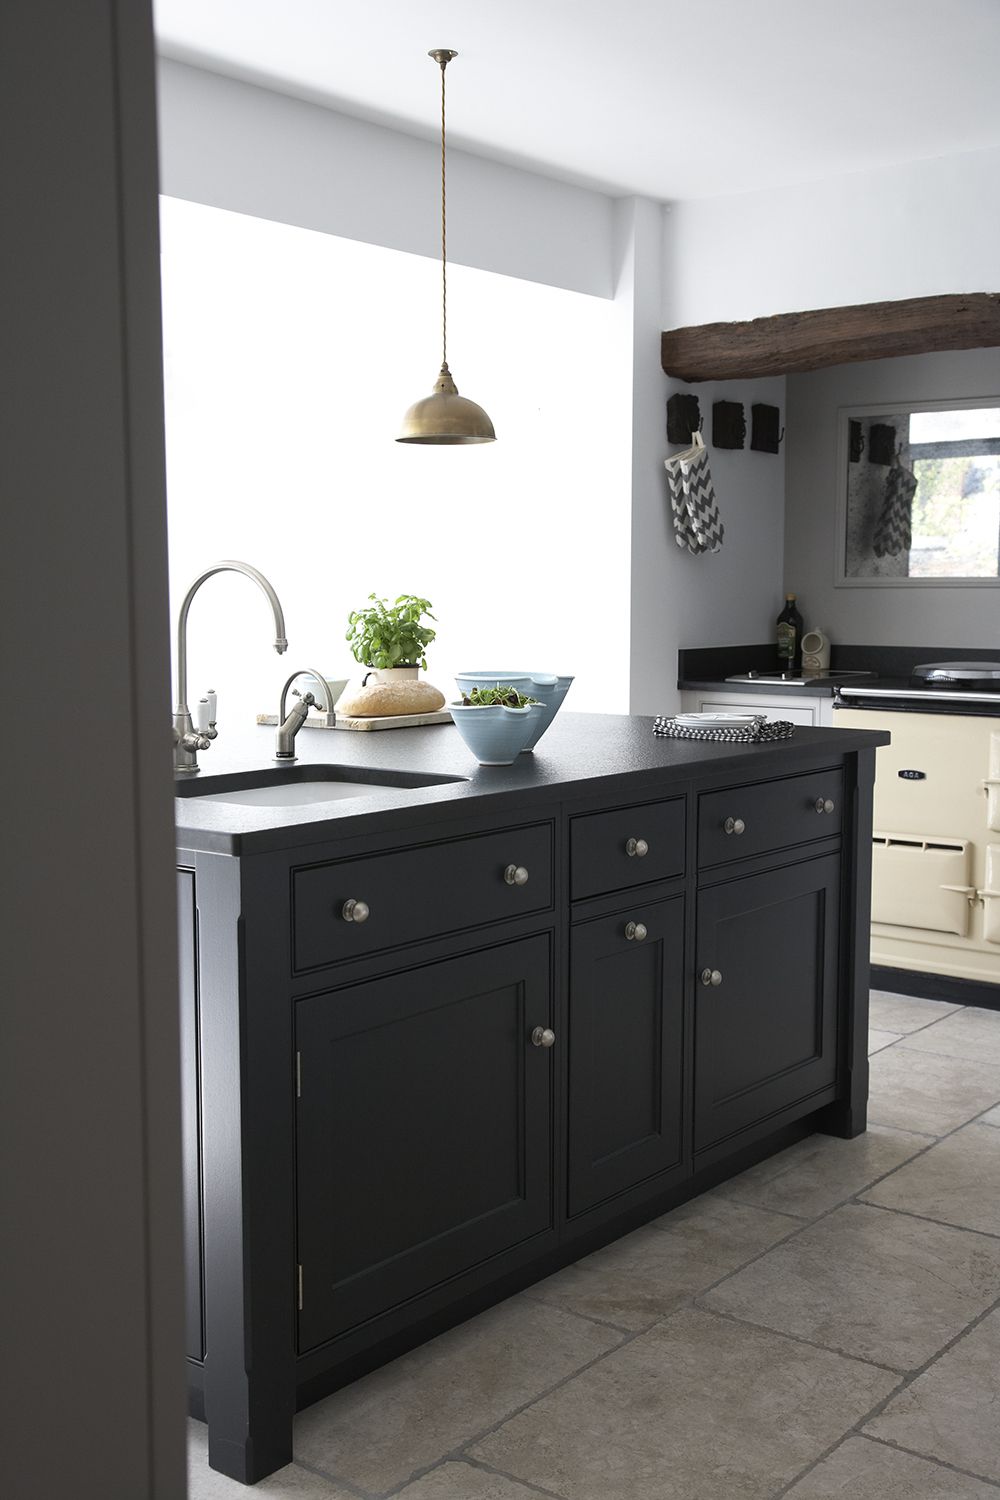 Classic Contemporary Victorian Kitchen Extension | Cream 2 oven Aga & bold kitchen island in "Off-Black".